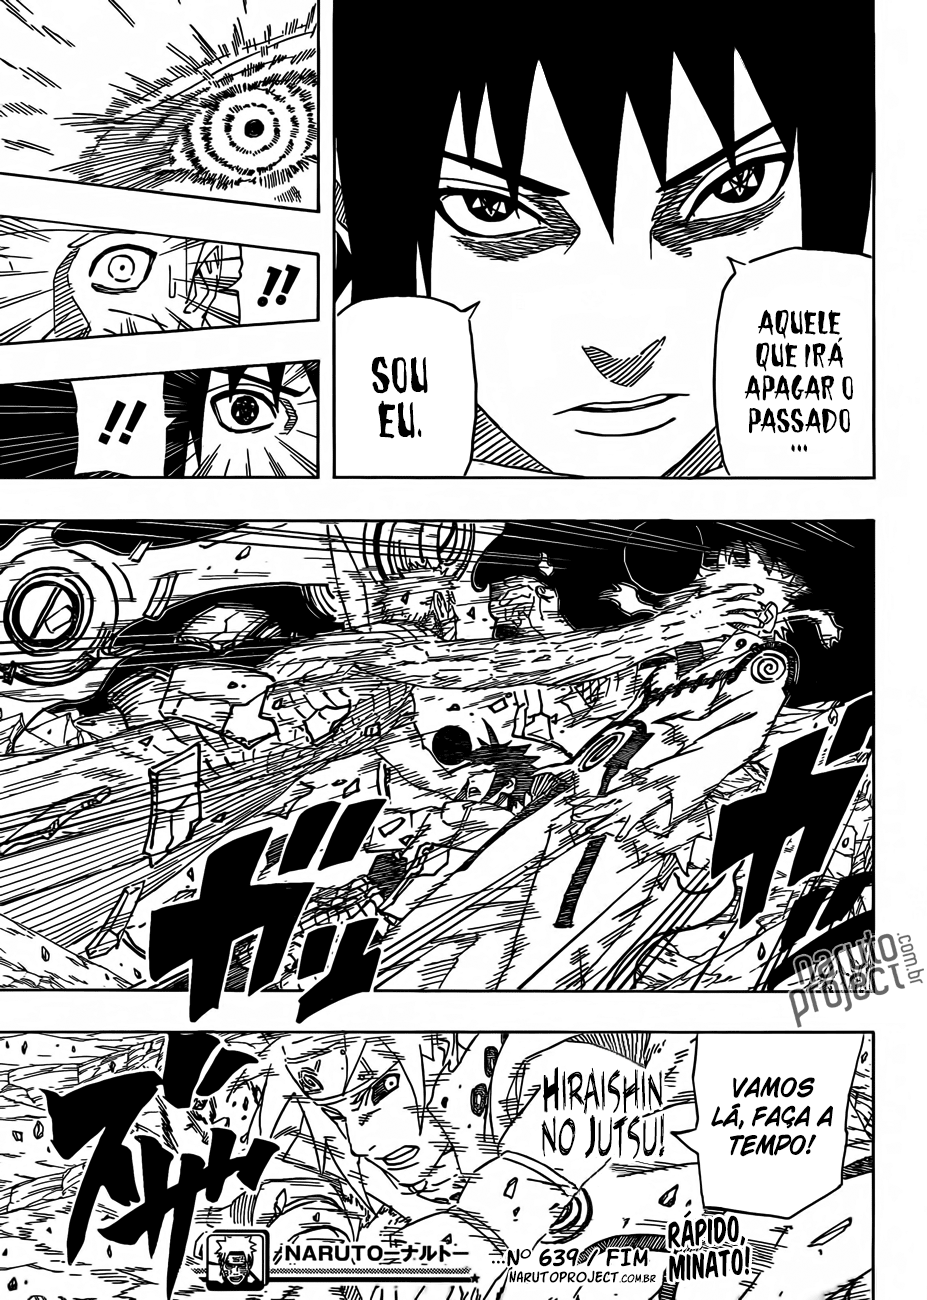 Naruto KM1(Guerra) vs Sasuke FMS(Guerra) - Página 2 1711